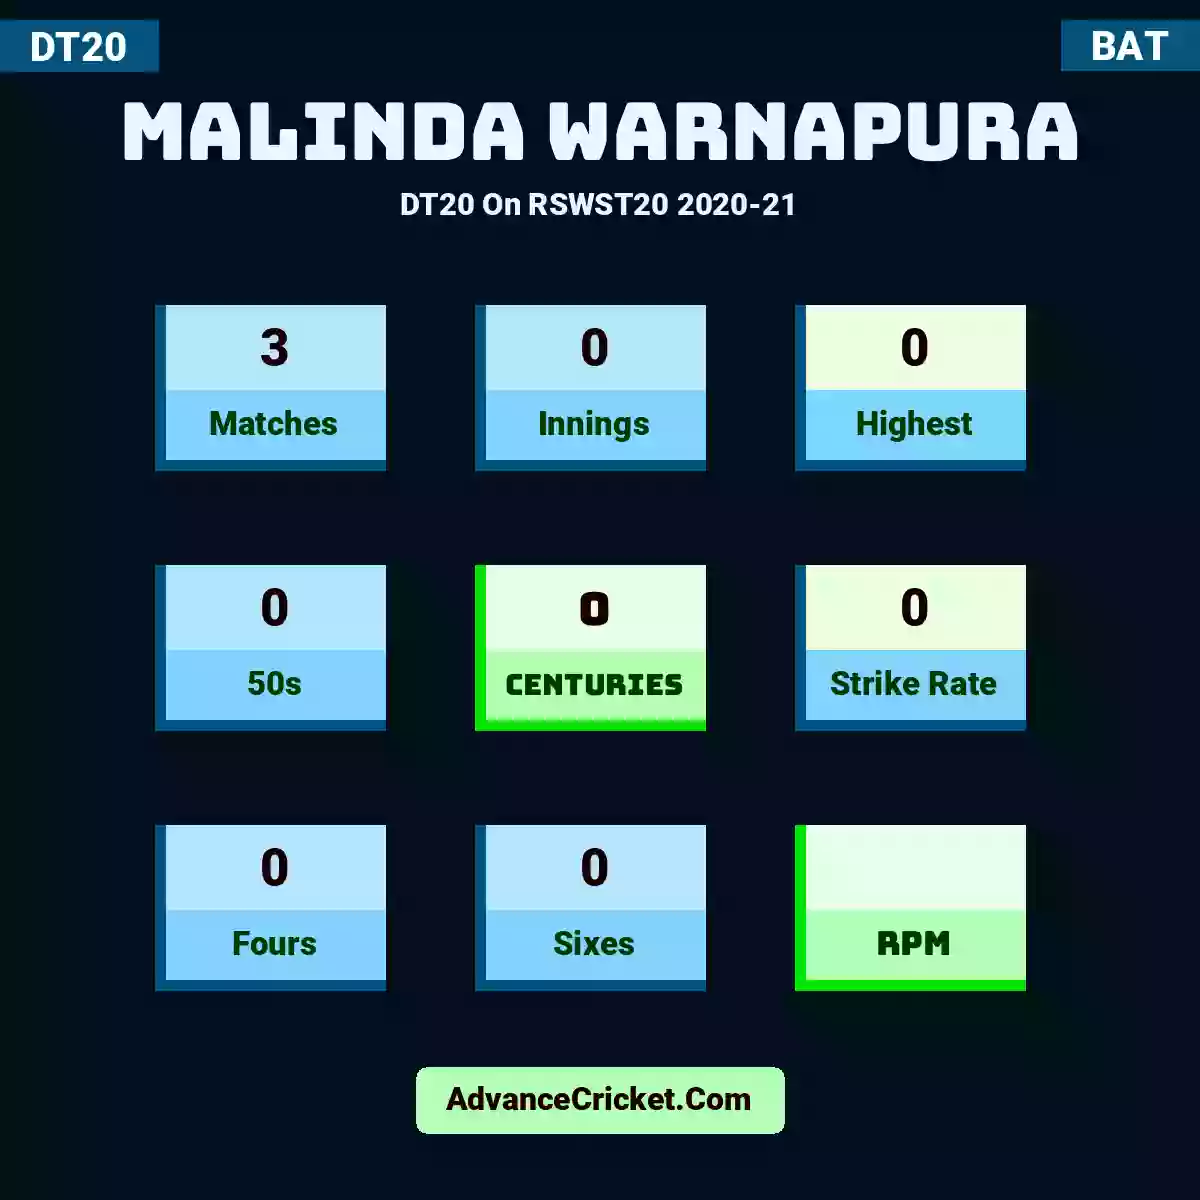 Malinda Warnapura DT20  On RSWST20 2020-21, Malinda Warnapura played 3 matches, scored 0 runs as highest, 0 half-centuries, and 0 centuries, with a strike rate of 0. M.Warnapura hit 0 fours and 0 sixes.